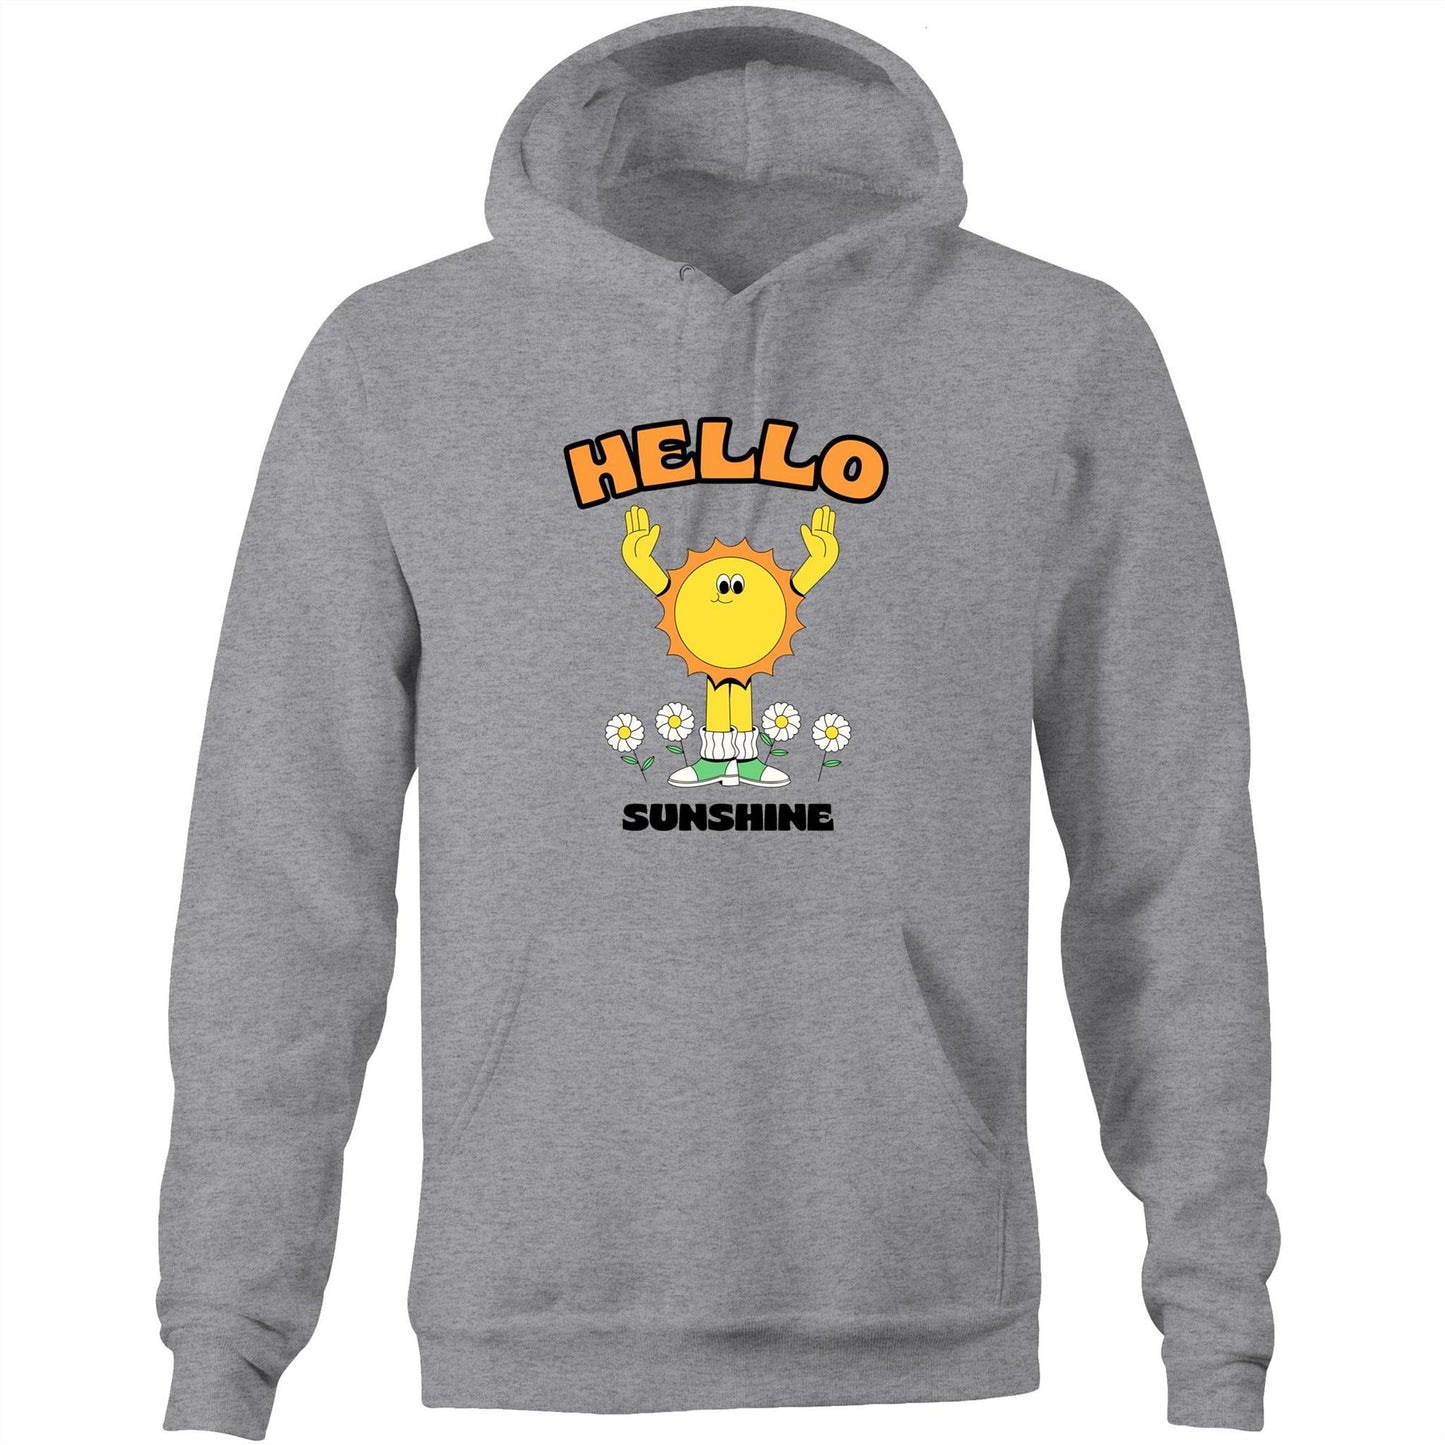 Hello Sunshine - Pocket Hoodie Sweatshirt Grey Marle Hoodie Retro Summer